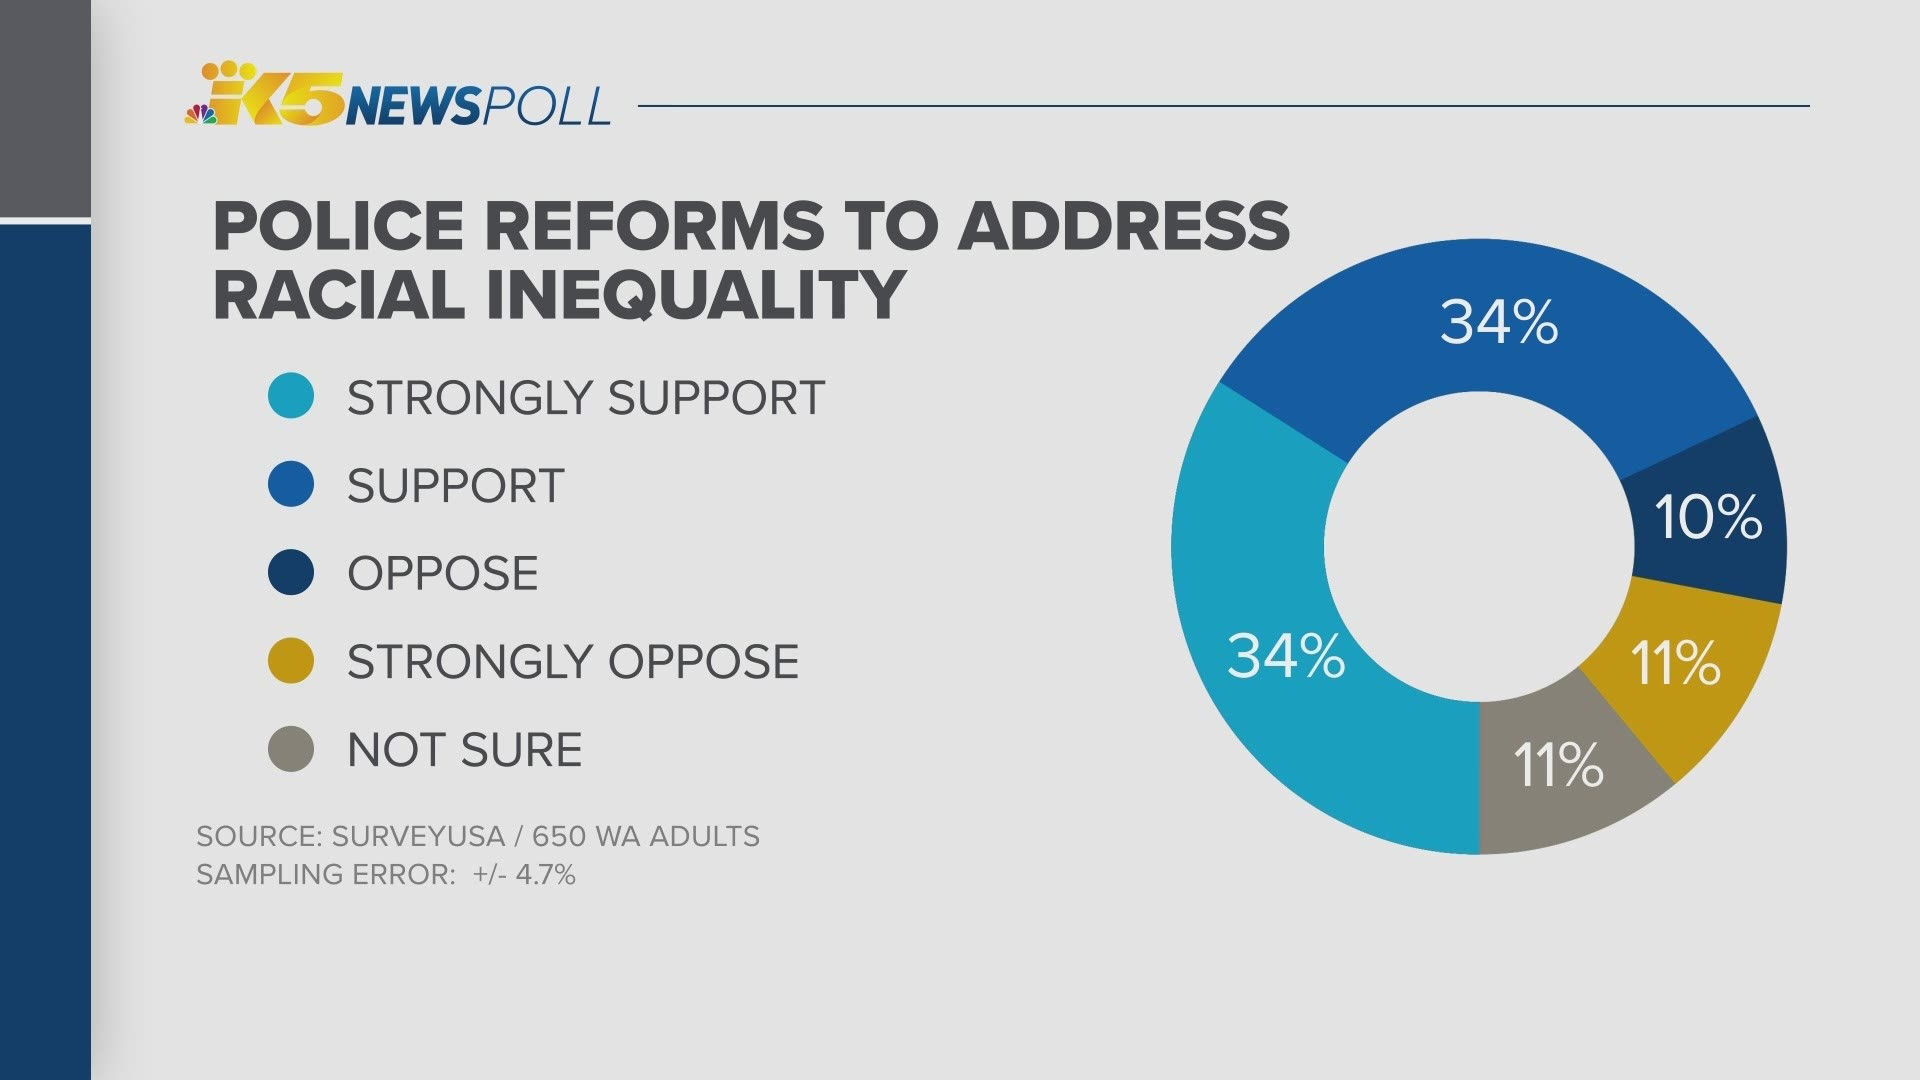 Regardless of age group, gender or political affiliation, most Washingtonians support police reform.